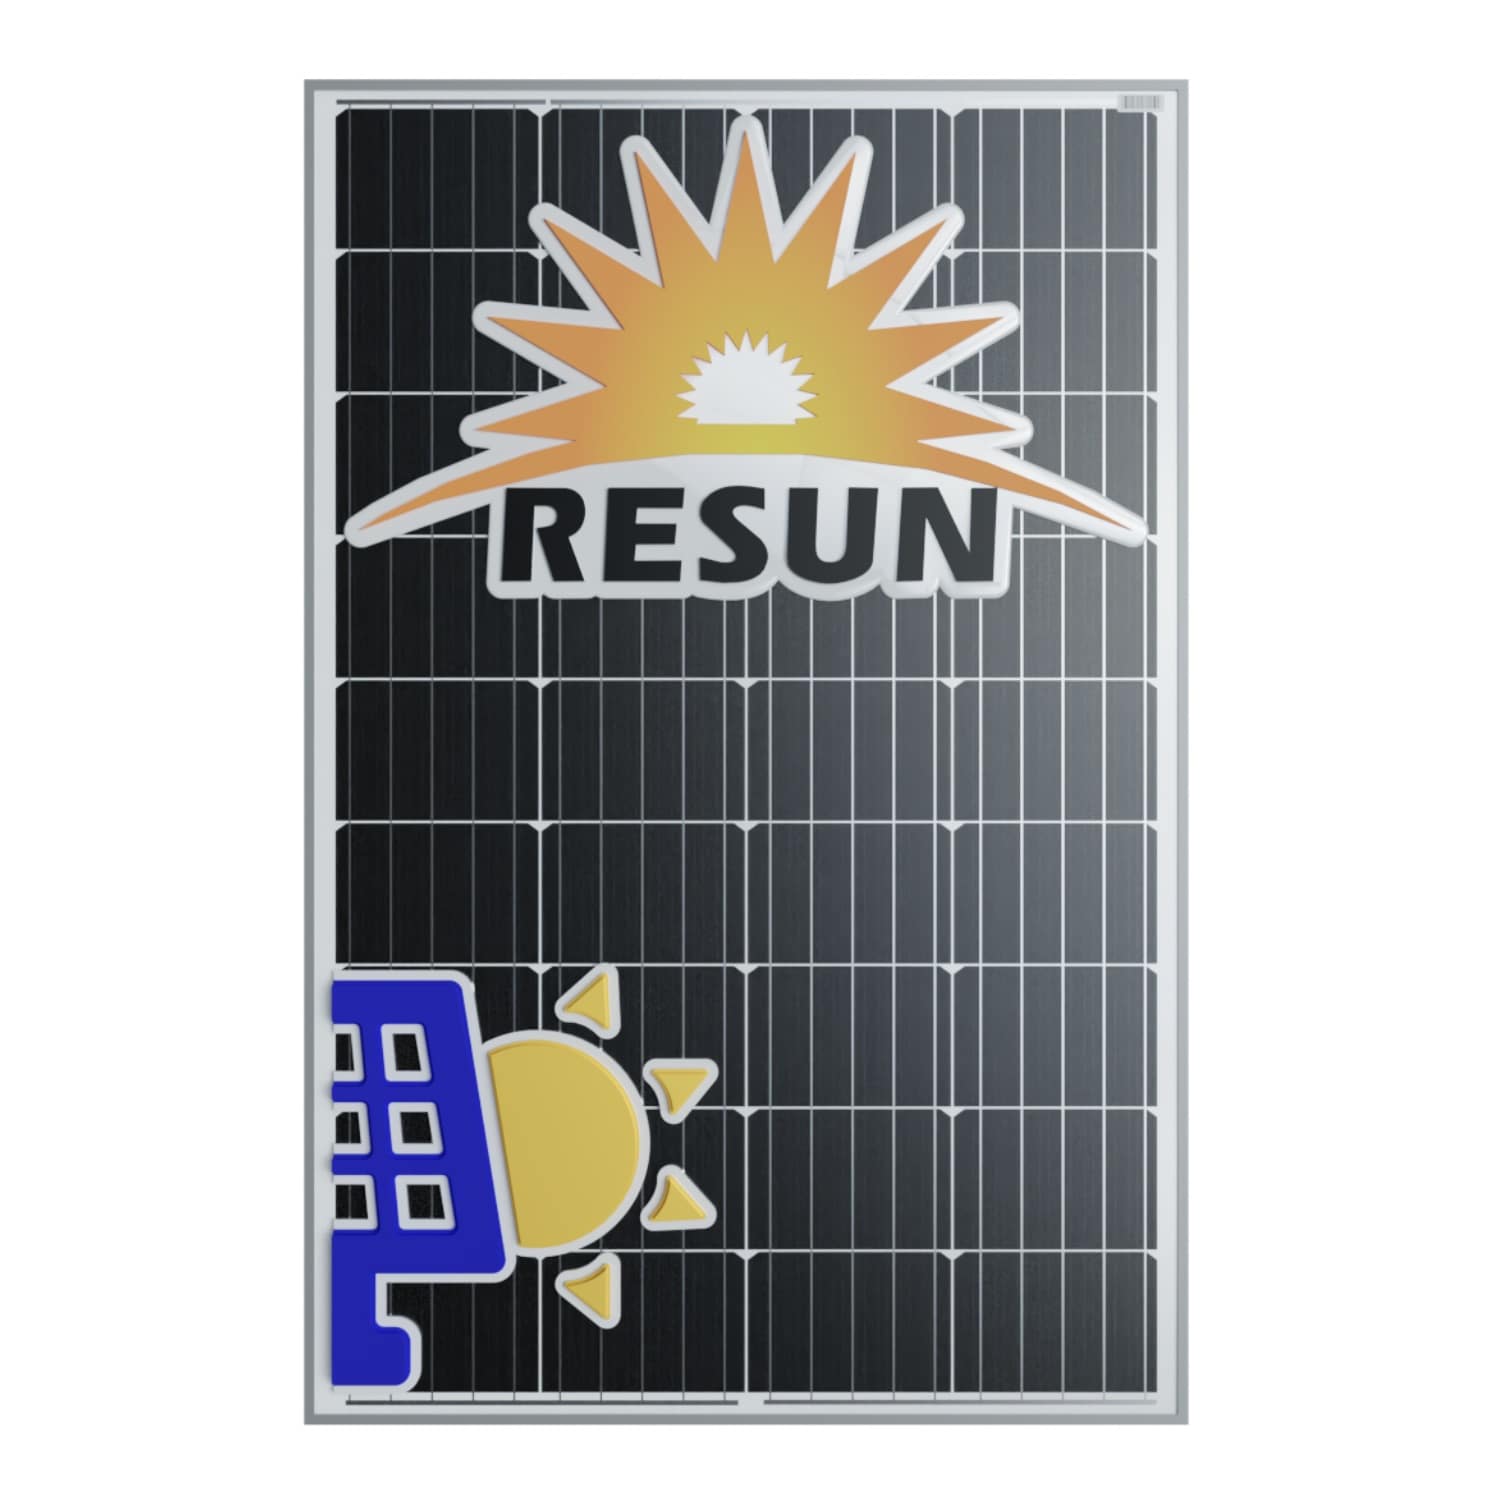 Panel Solar 12V 100W Policristalino 36 Células Máxima Eficiencia